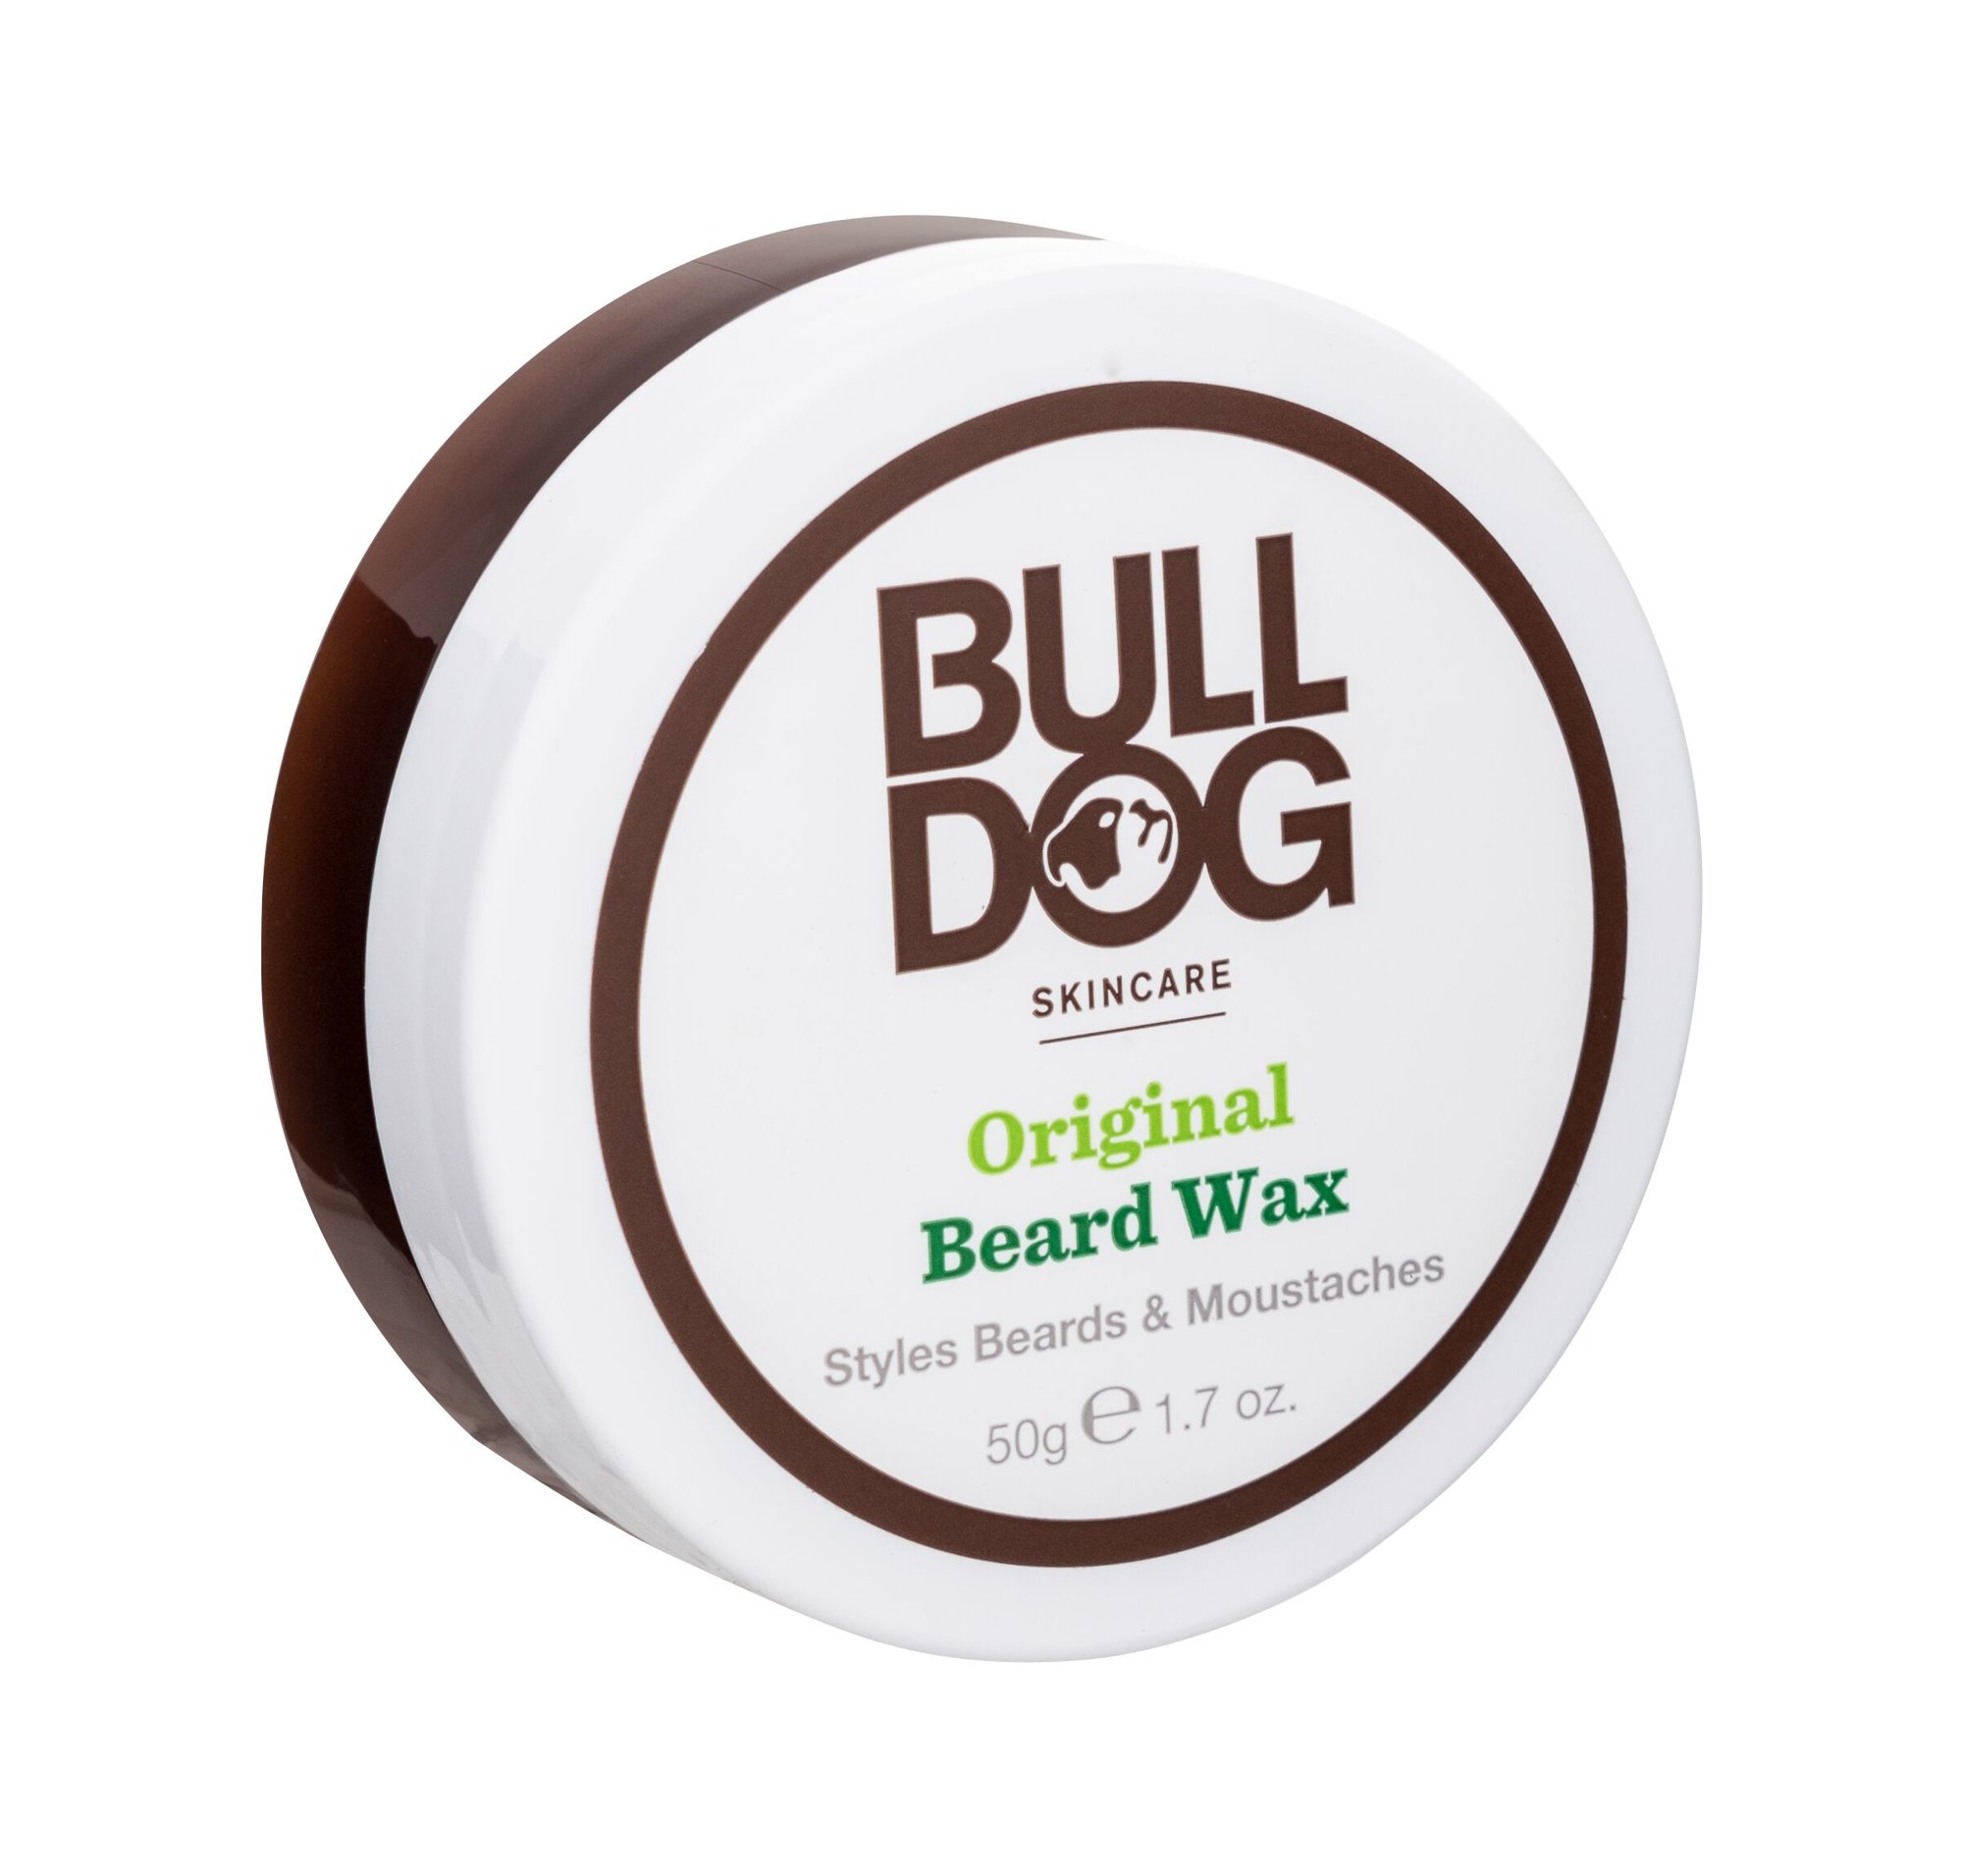 Bulldog Original Beard Wax barzdos vaškas